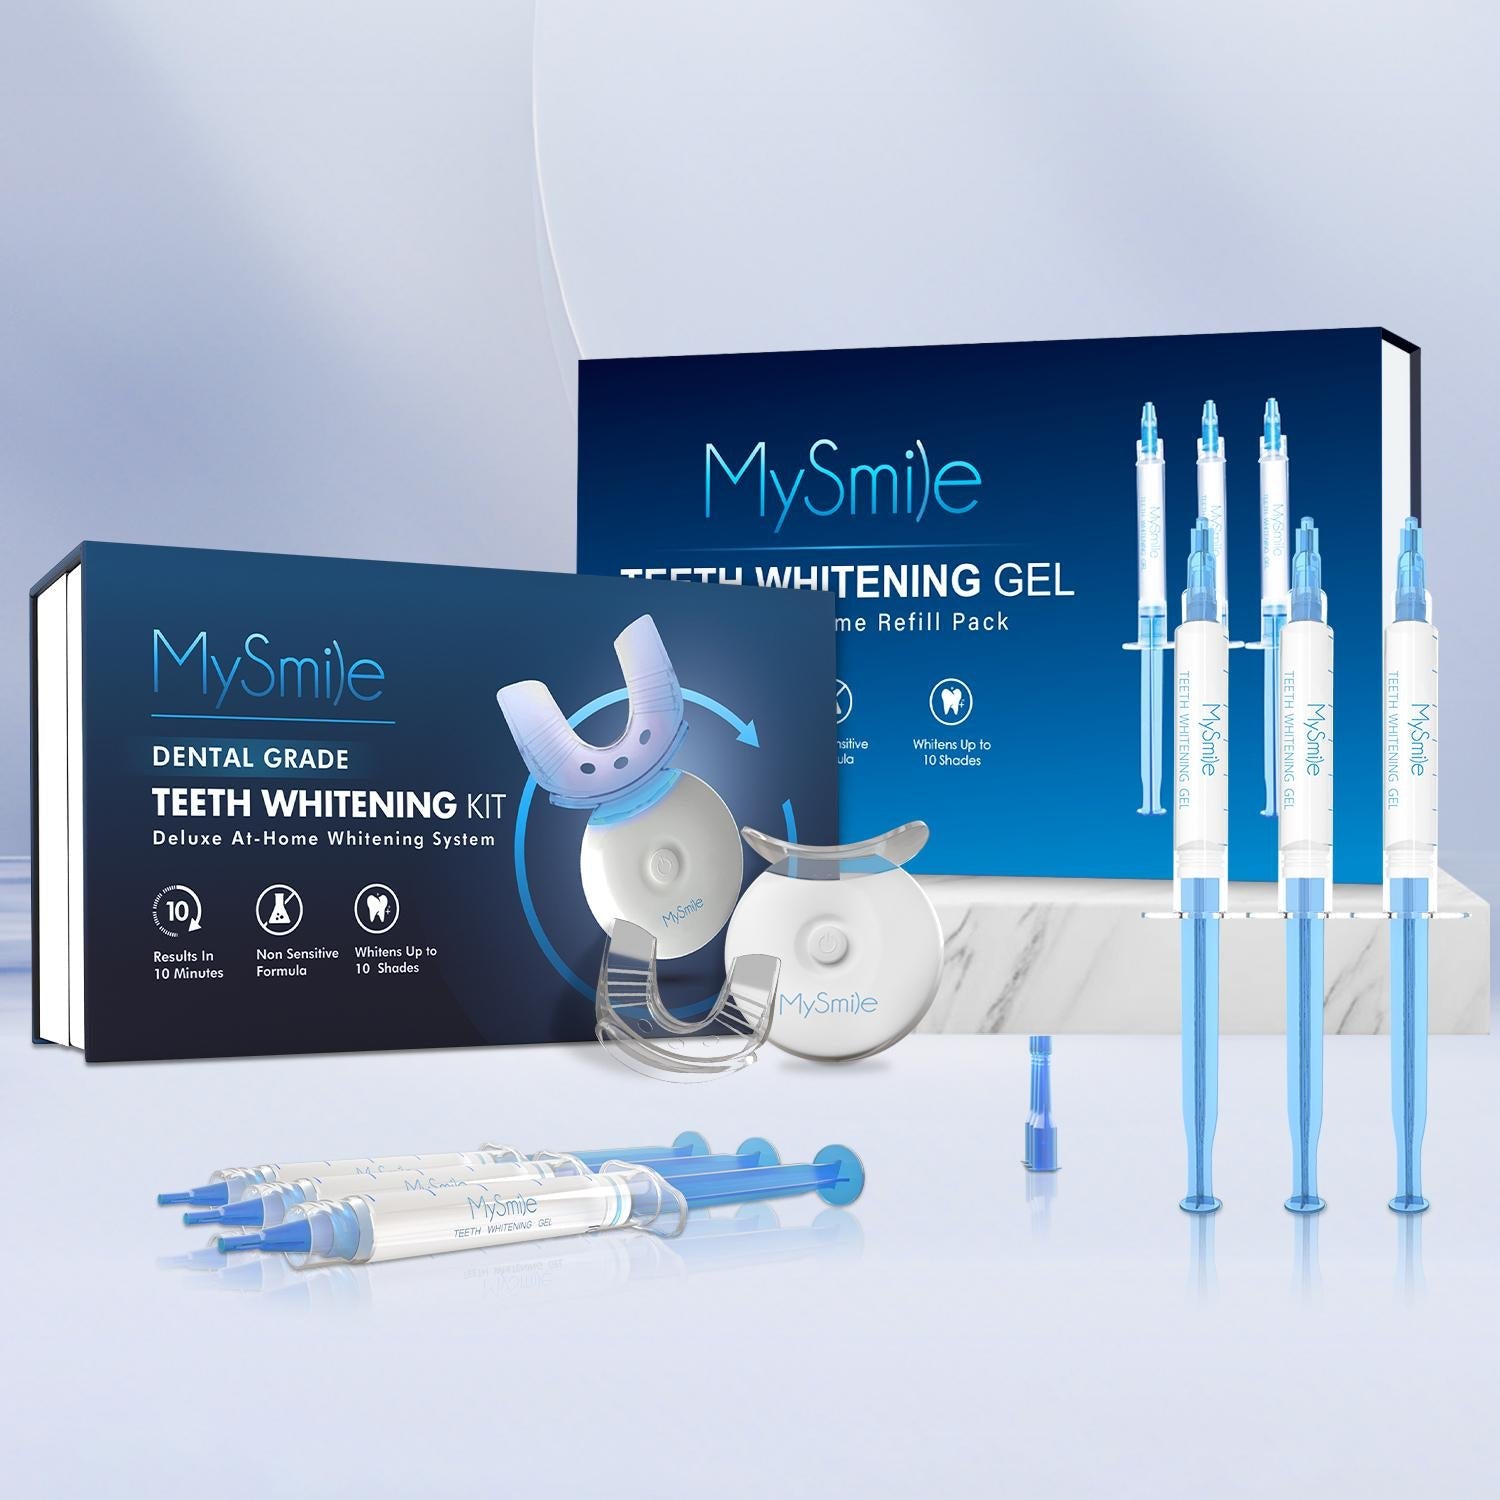 5x LED Teeth Whitening Kit with Teeth Whitening Gel Bundle - MySmile